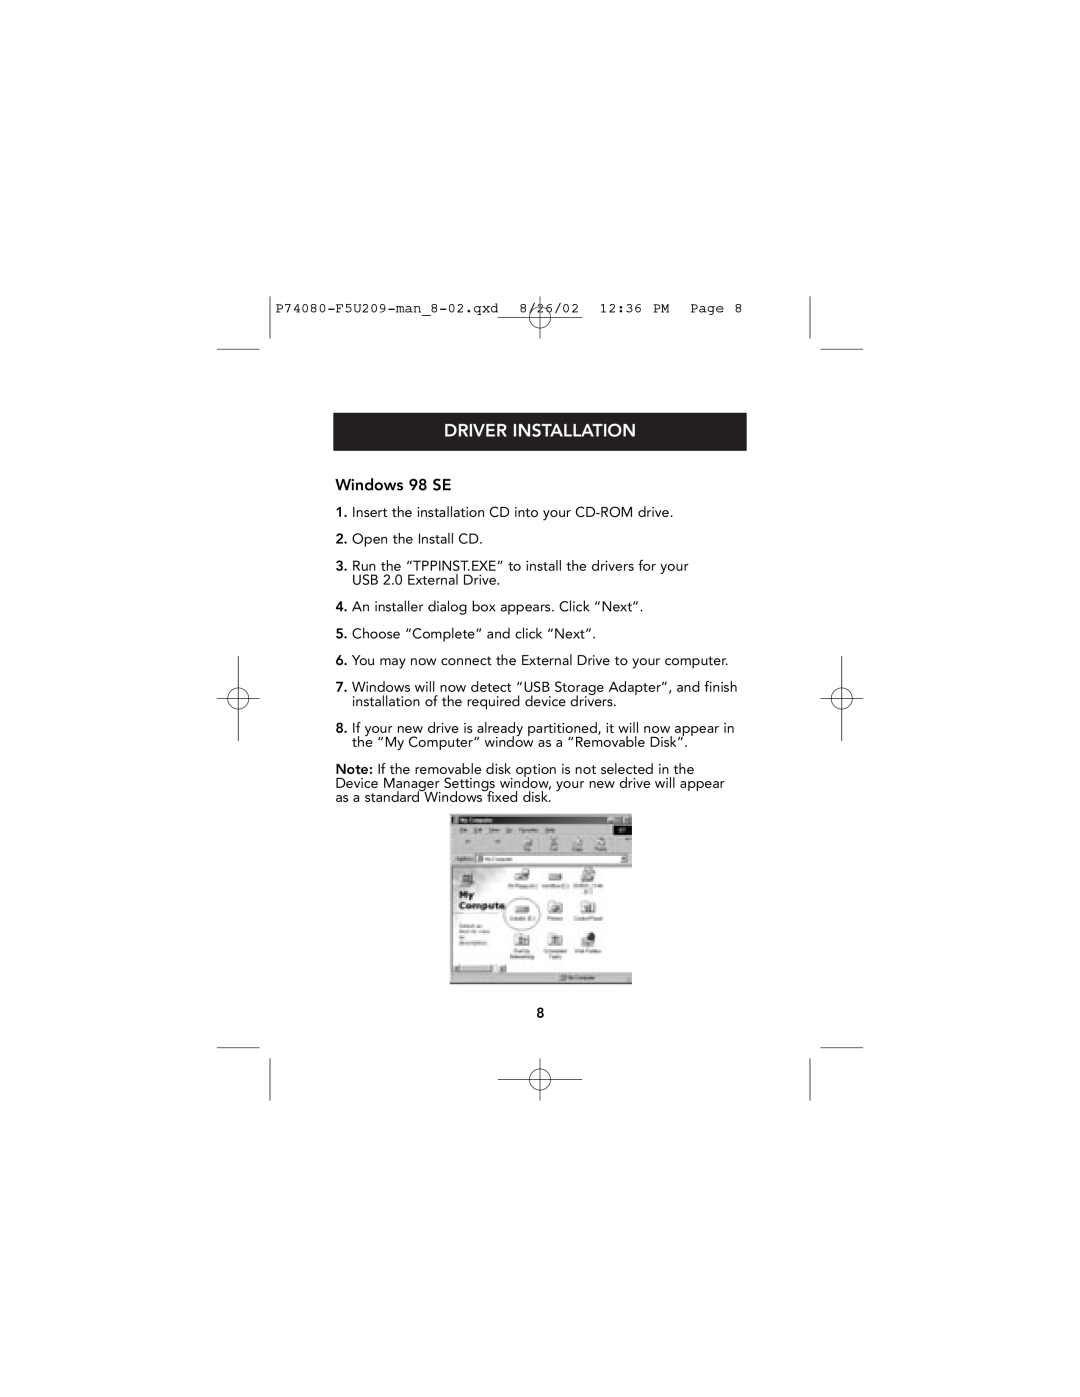 Belkin P74080 user manual Driver Installation, Windows 98 SE 